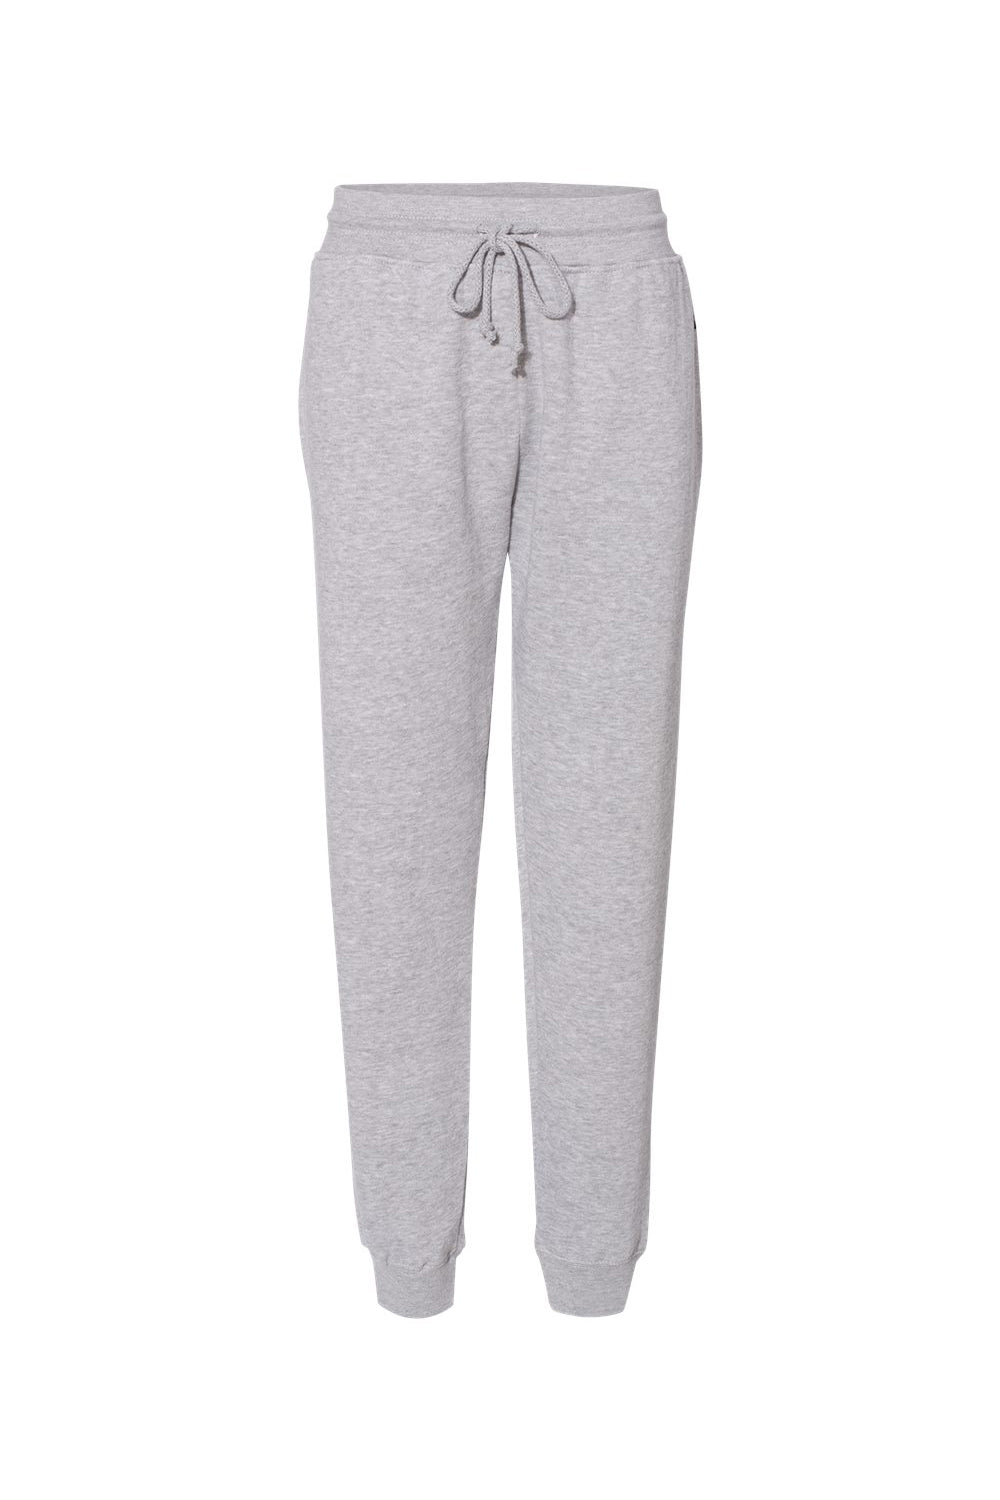 Badger 1216 Womens Athletic Fleece Jogger Sweatpants w/ Pockets Oxford Grey Flat Front